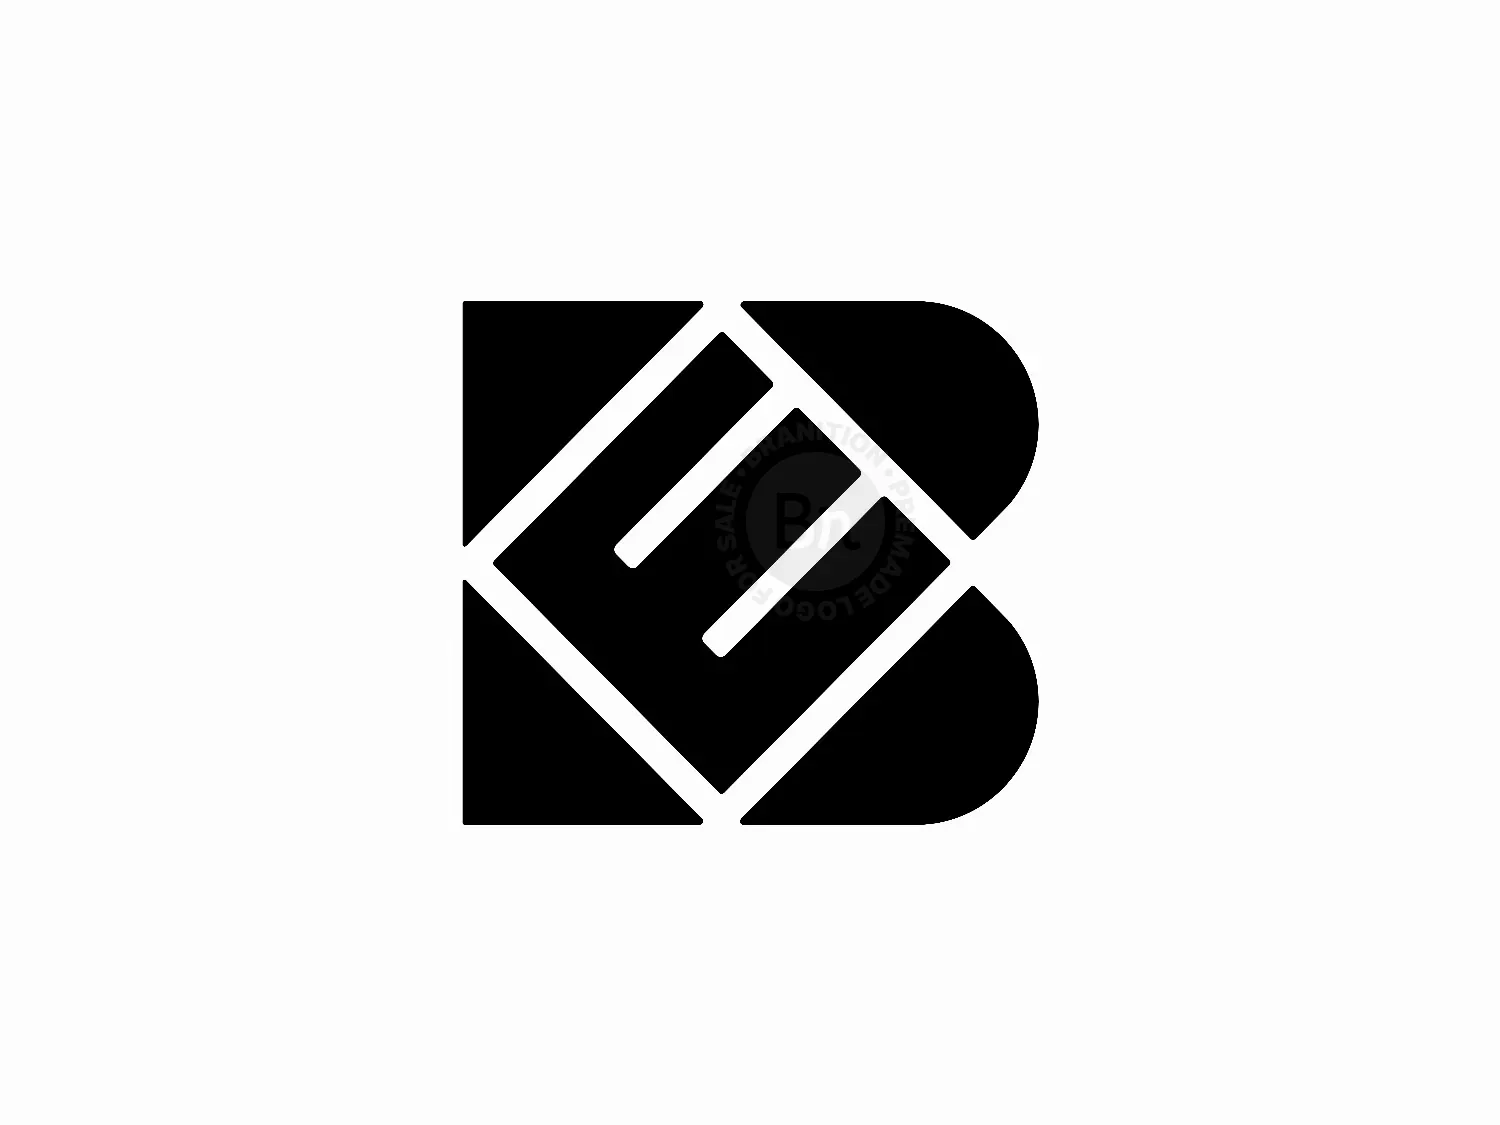 Letter BE EB Logo